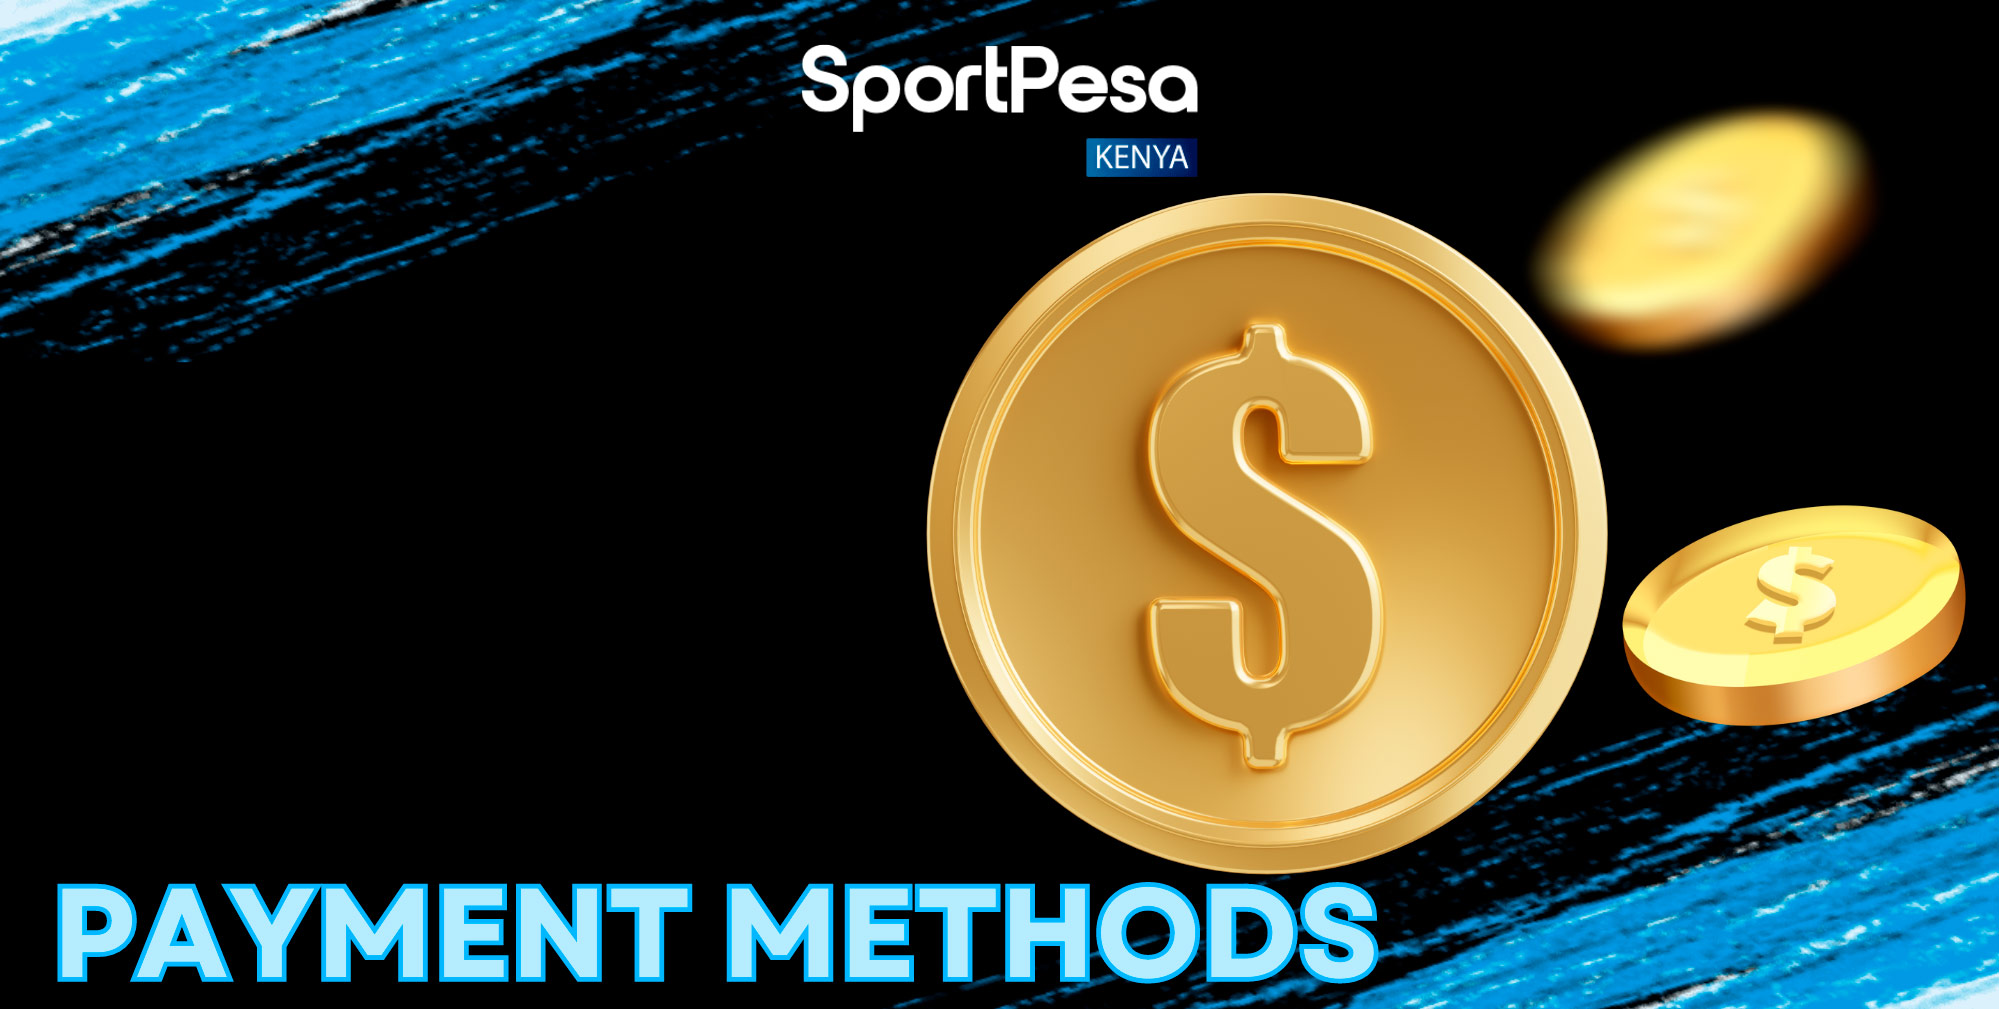 Sportpesa offers convenient payment methods